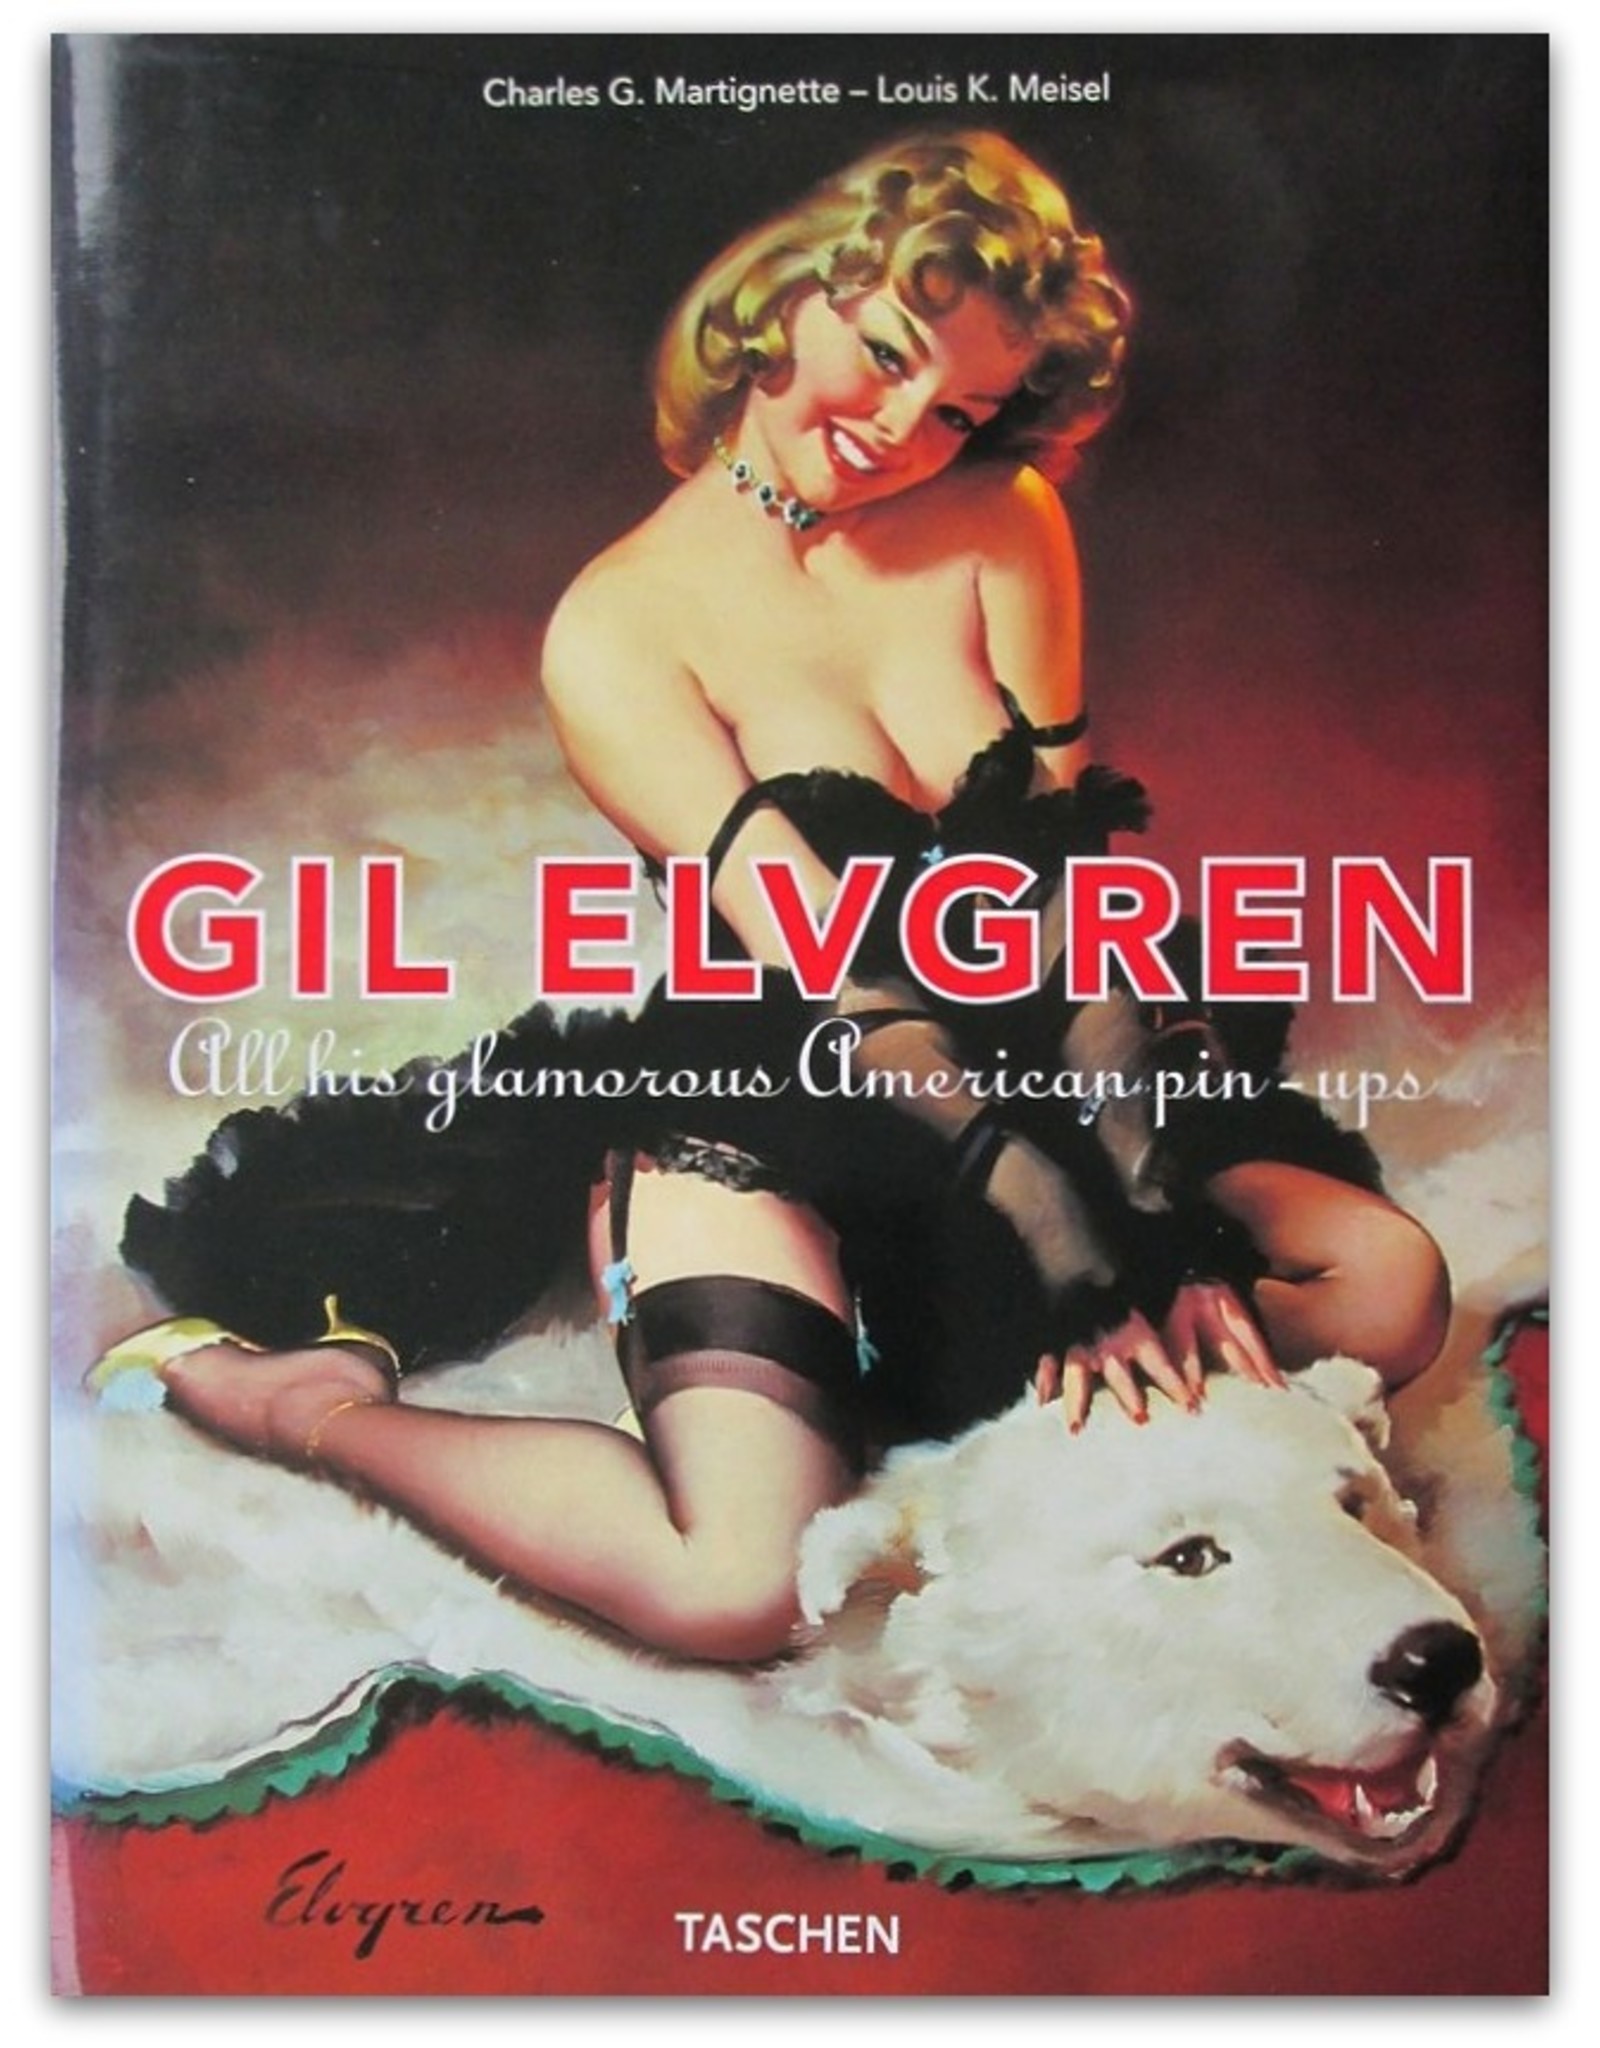 Gil Gil Sex - Martignette & Meisel - Gil Elvgren: All his glamorous American pin-ups -  Arcana Cabana